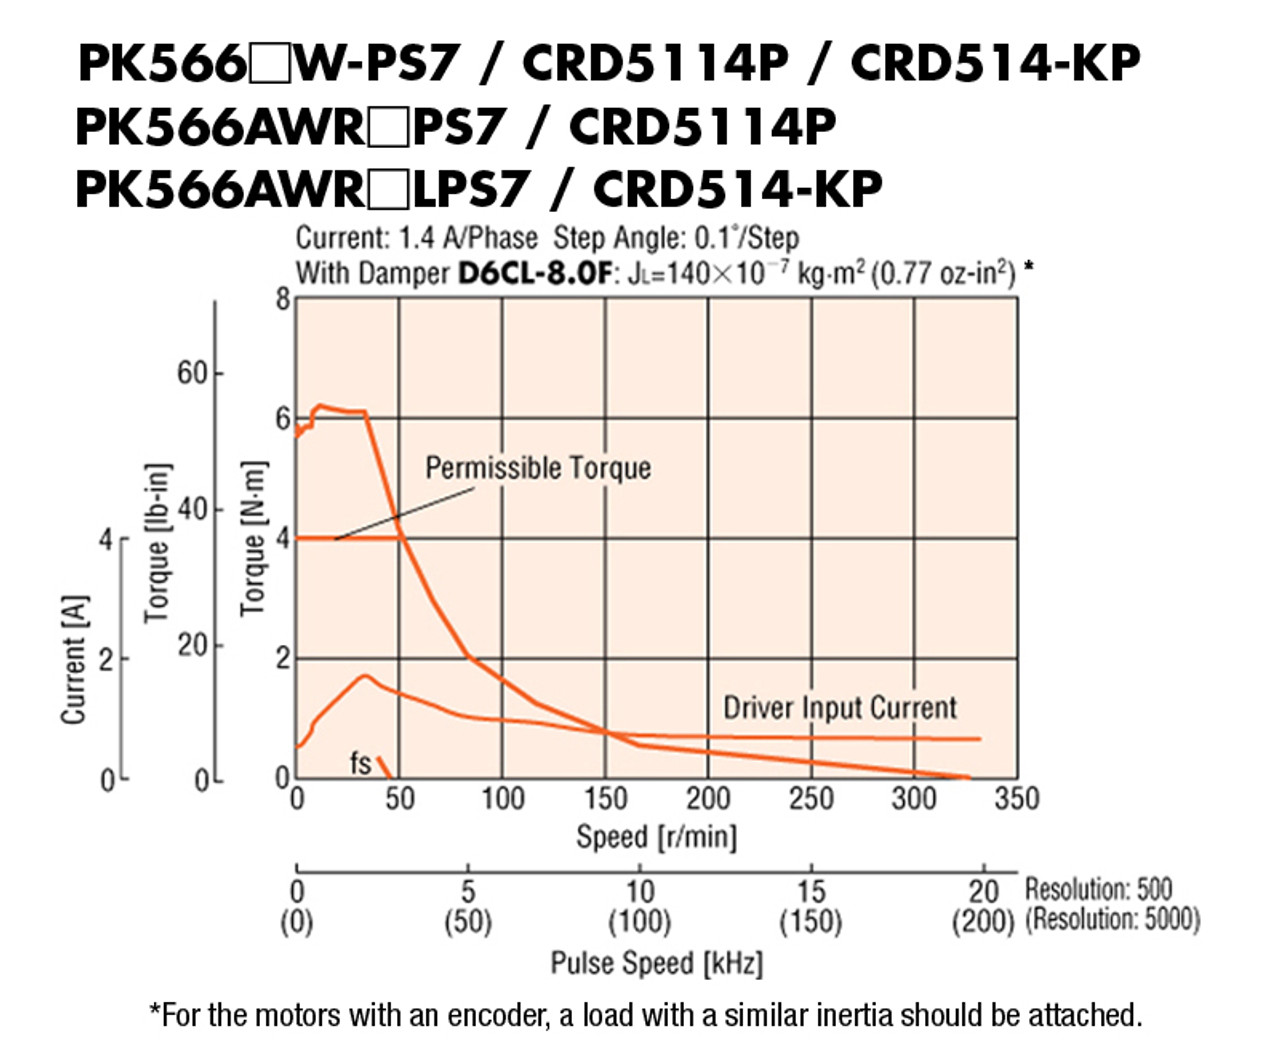 PK566BW-PS7 - Speed-Torque